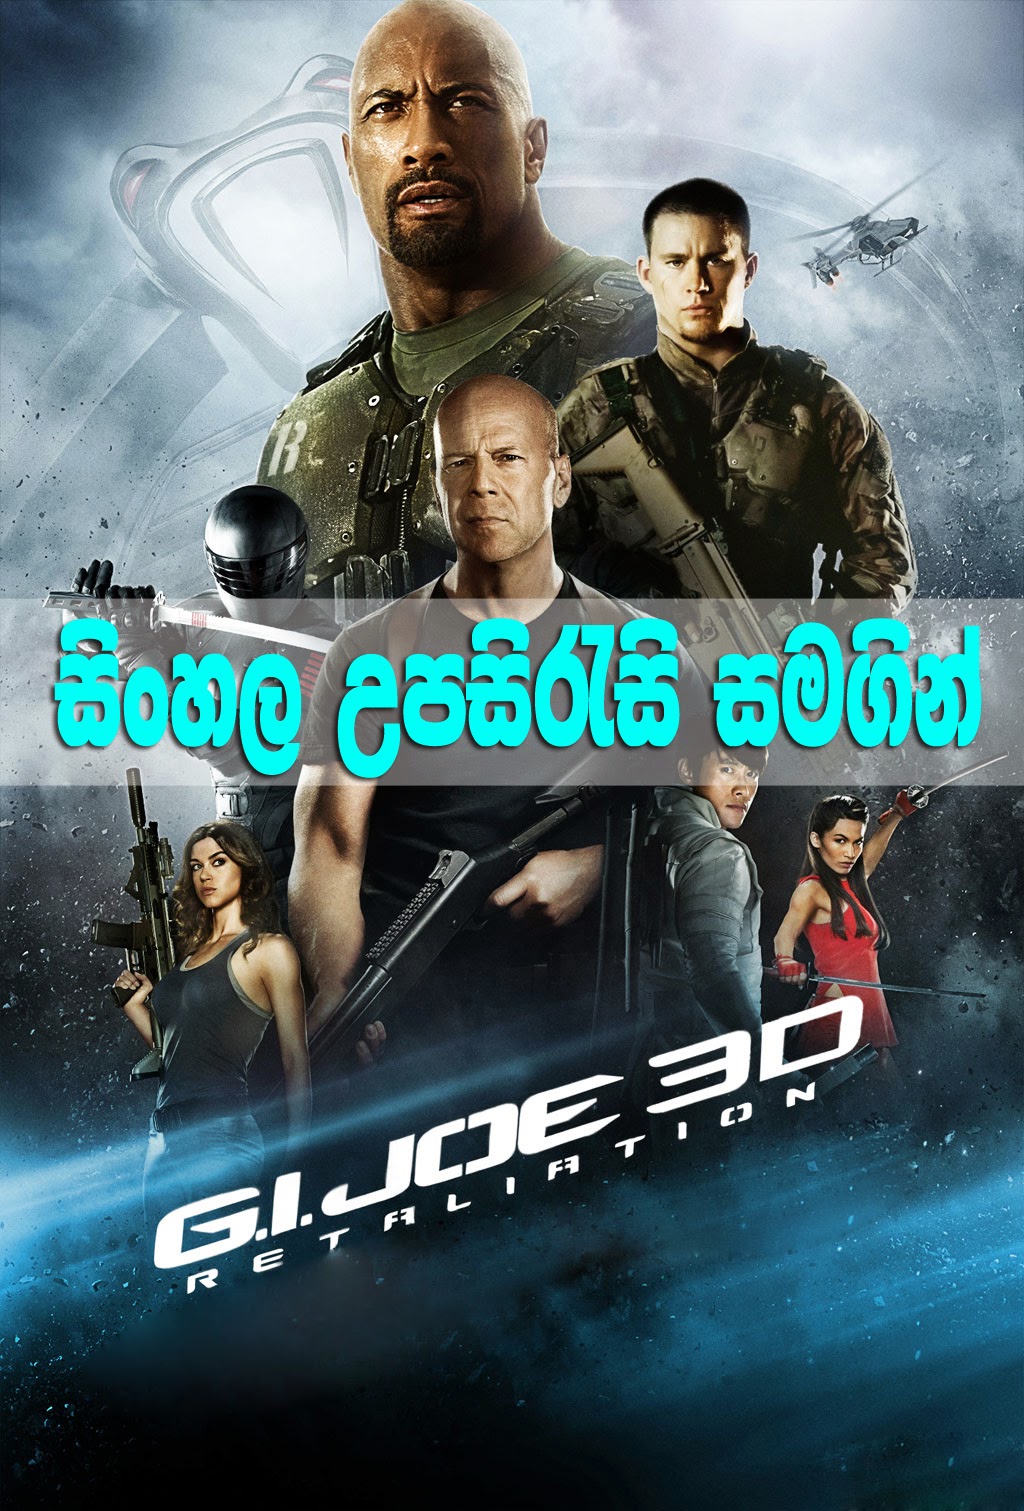 G.I. Joe Retaliation 2013 HD WITH SINHALA